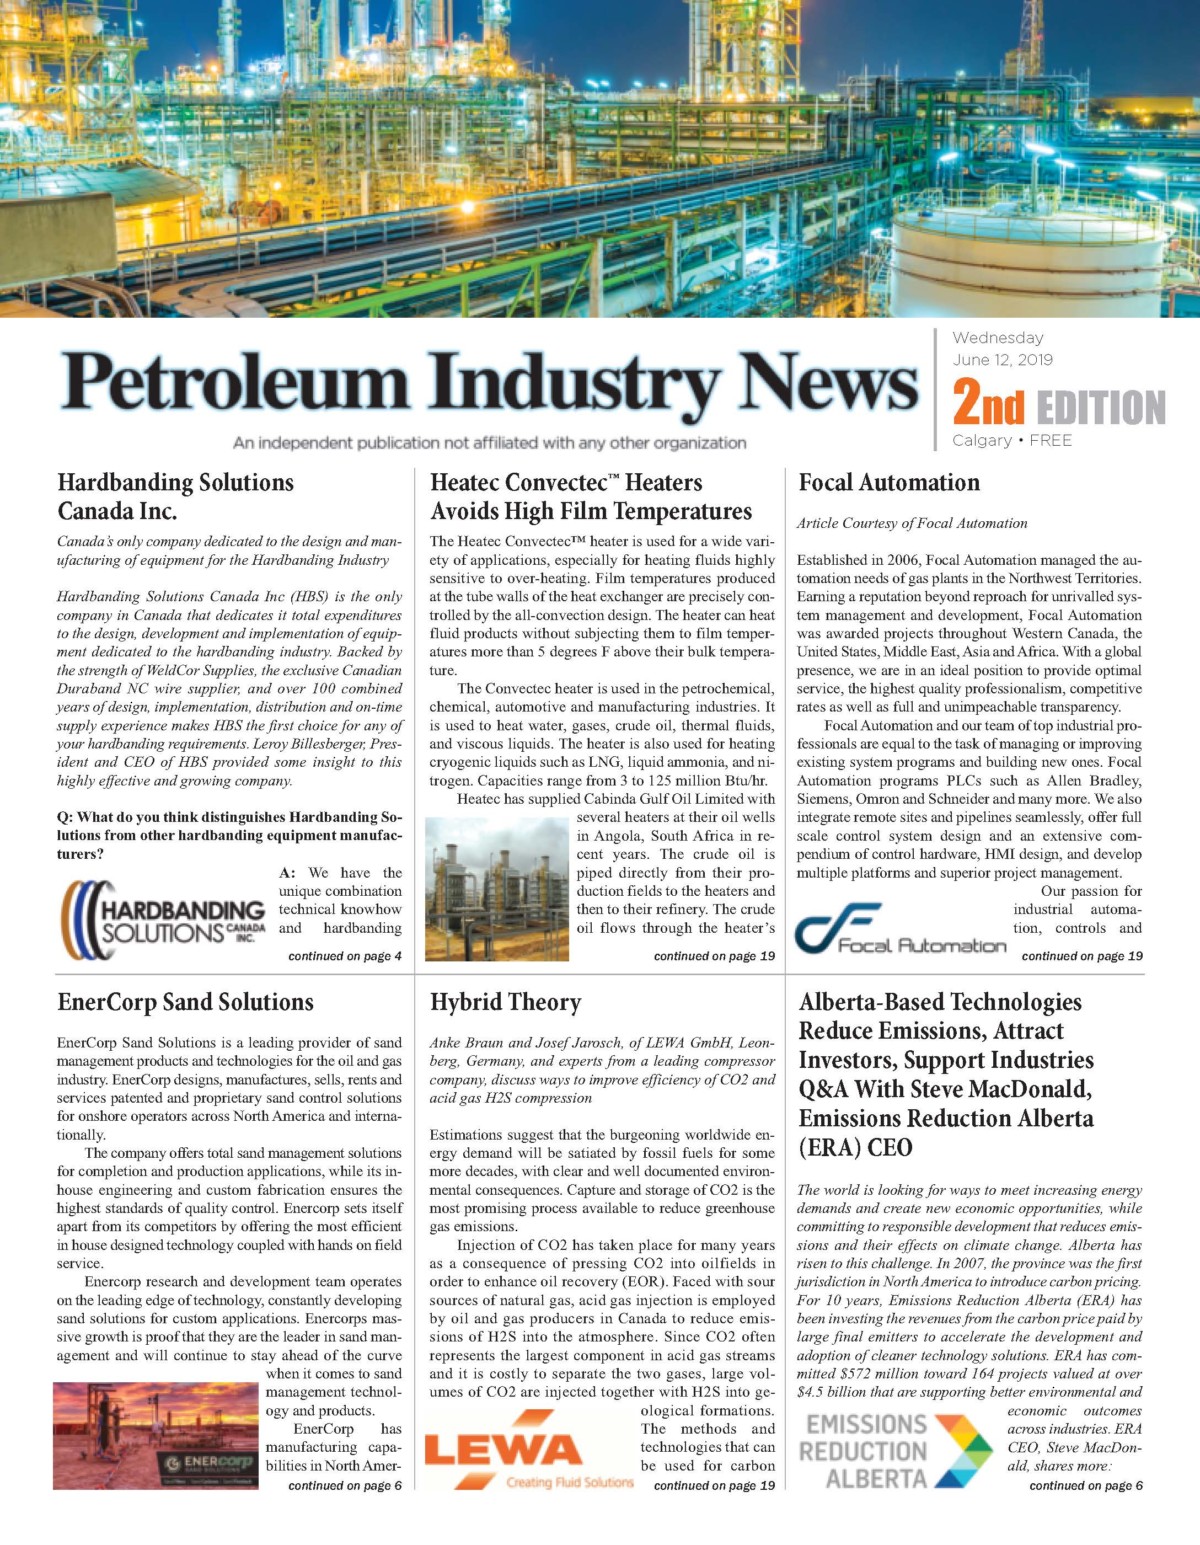 Petroleum Industry News - Trade Show News Publications